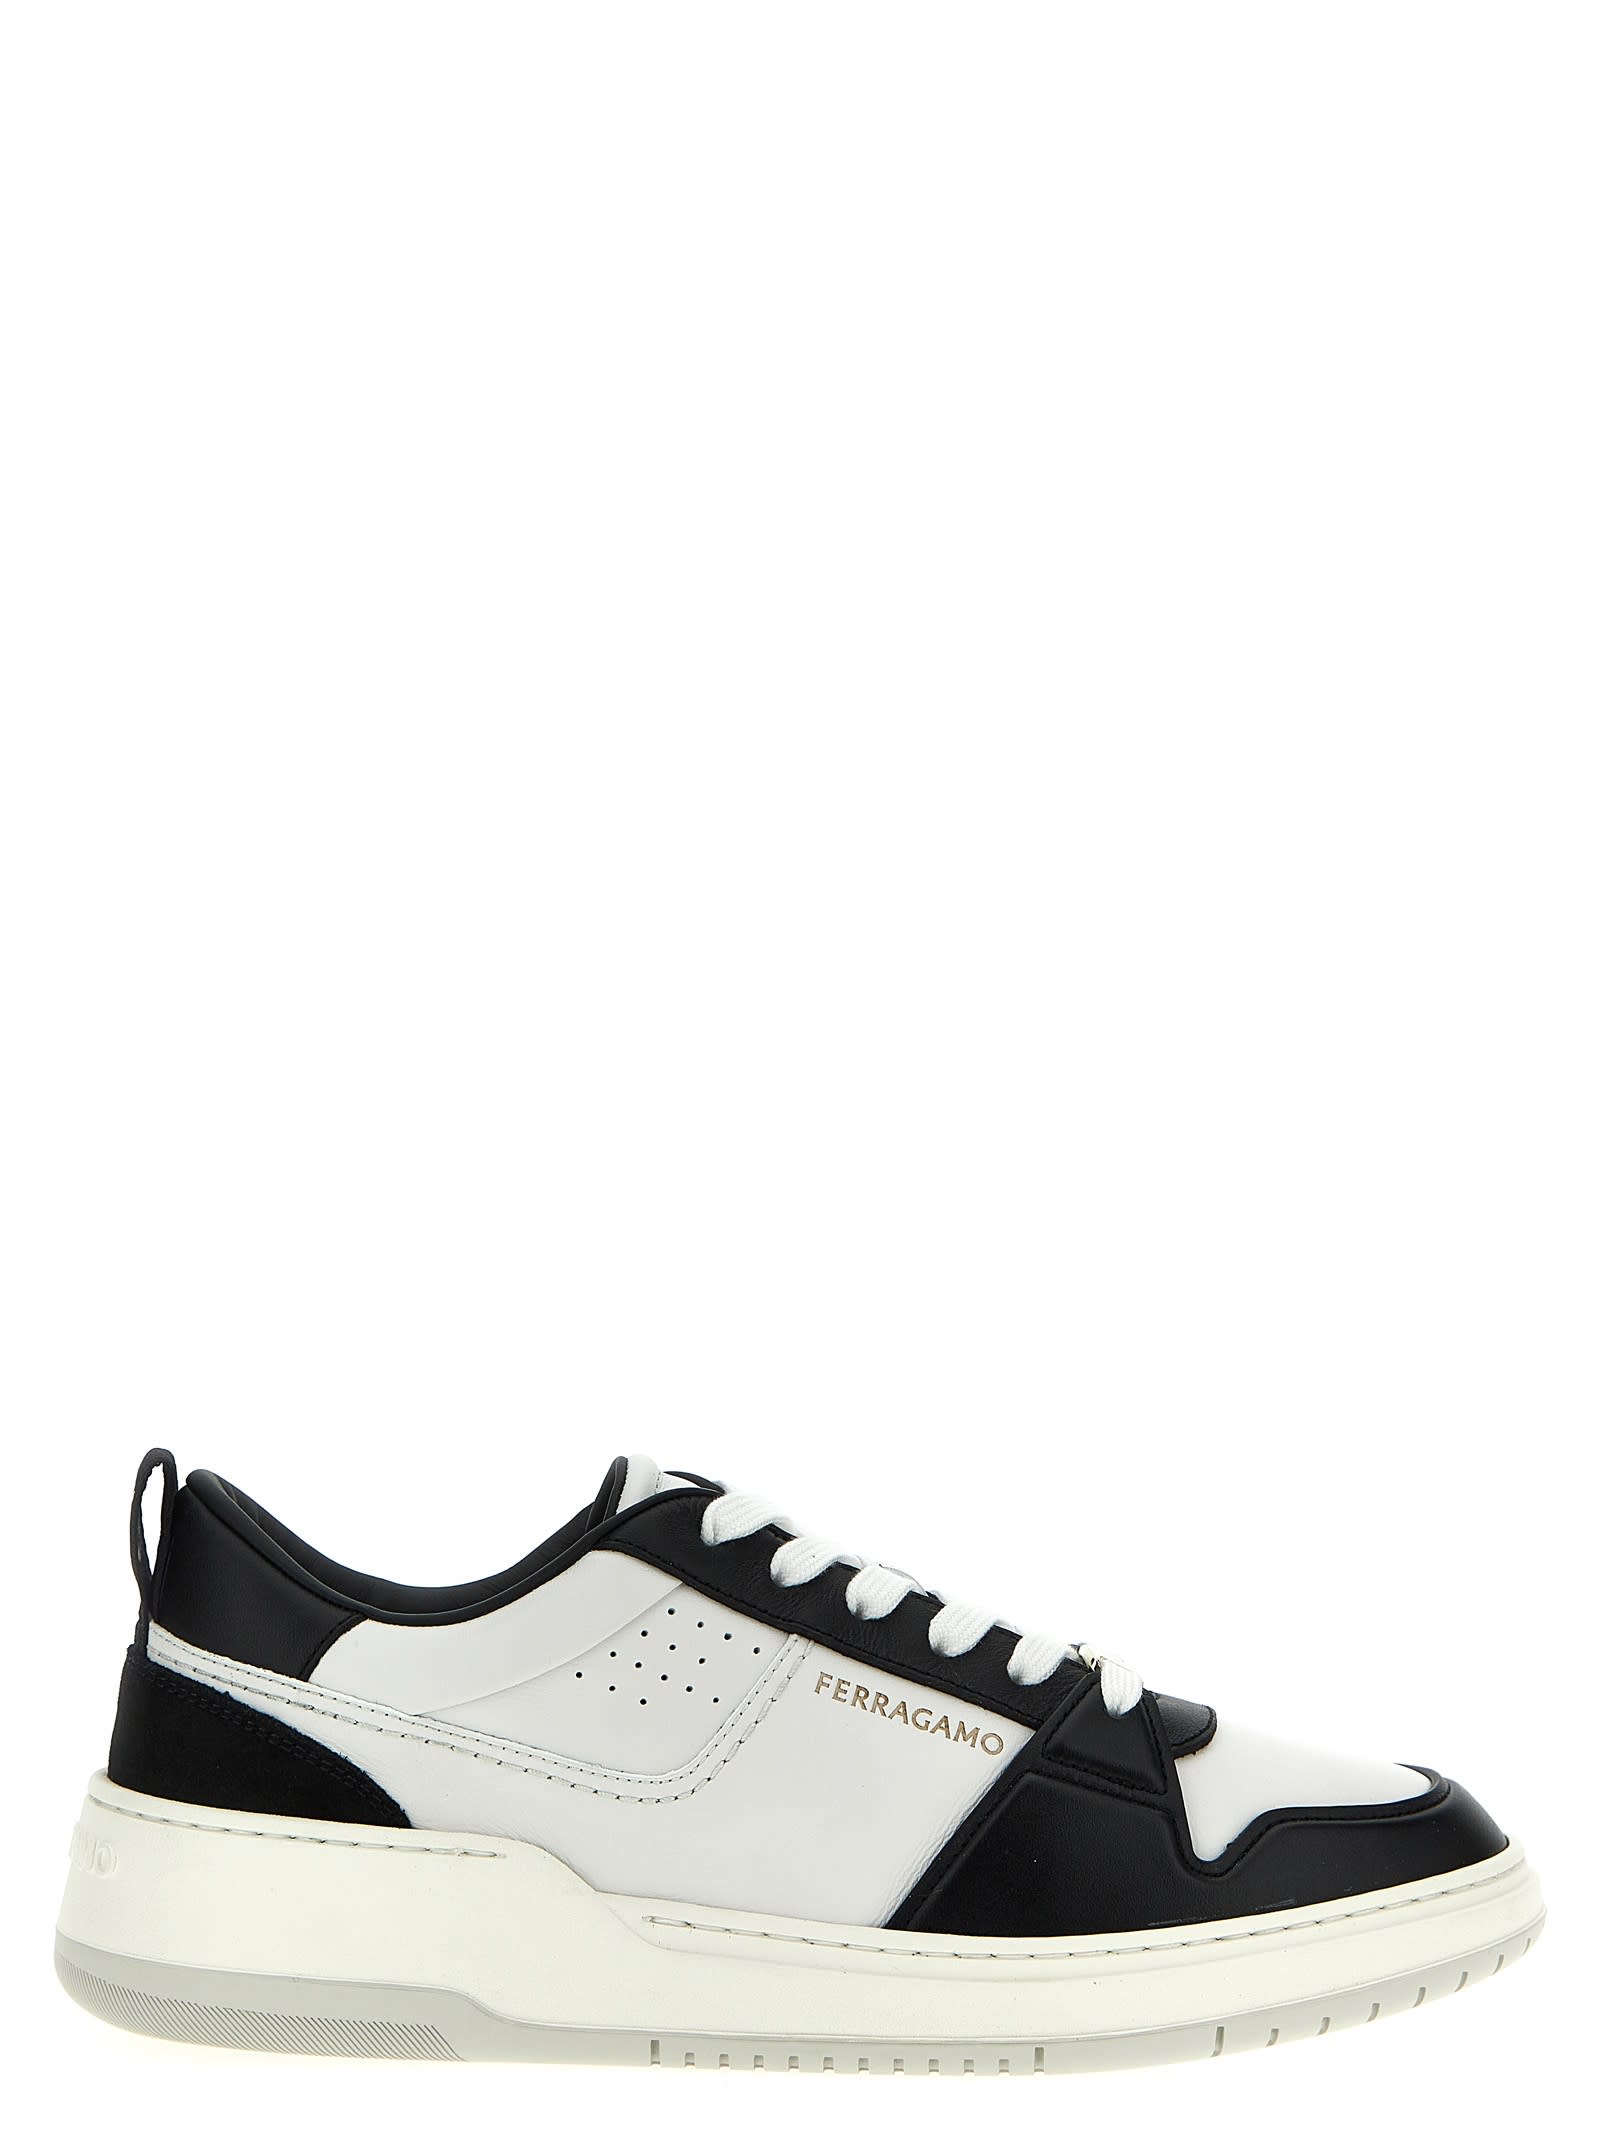 Shop Ferragamo Dennis Sneakers In White/black